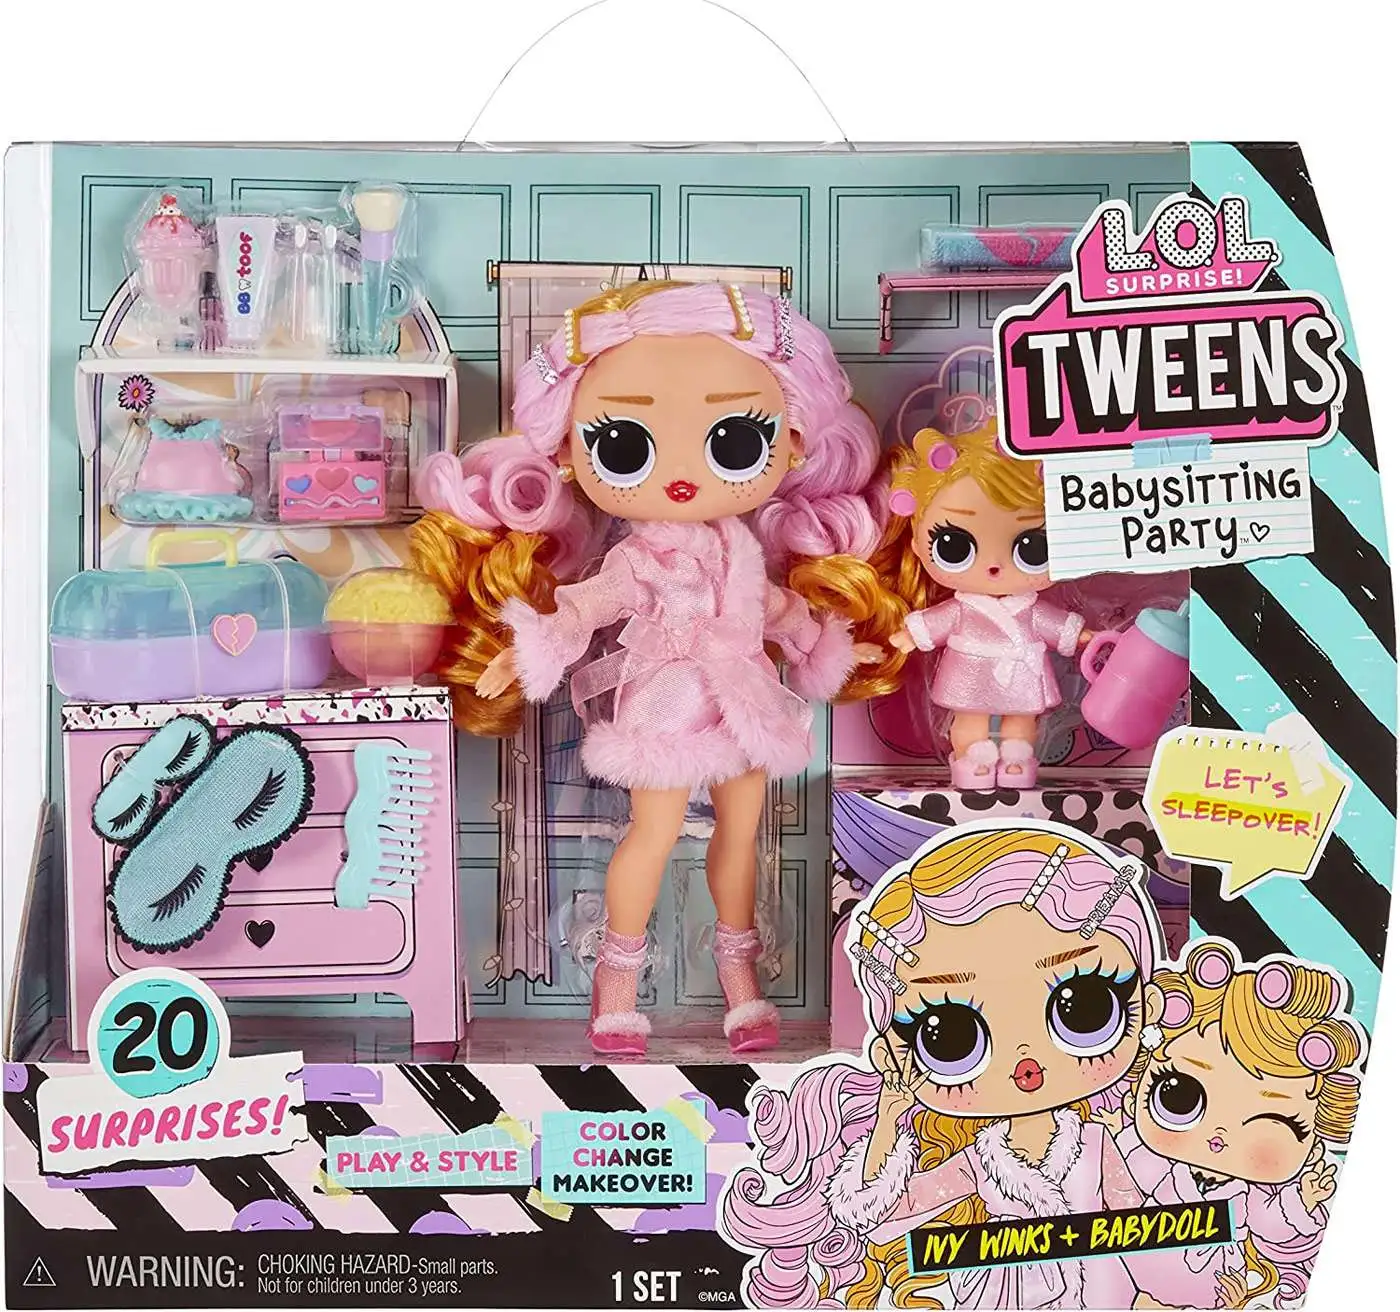 LOL Surprise Tweens Babysitting Sleepover Party Ivy Winks Babydoll Fashion  Doll MGA Entertainment - ToyWiz